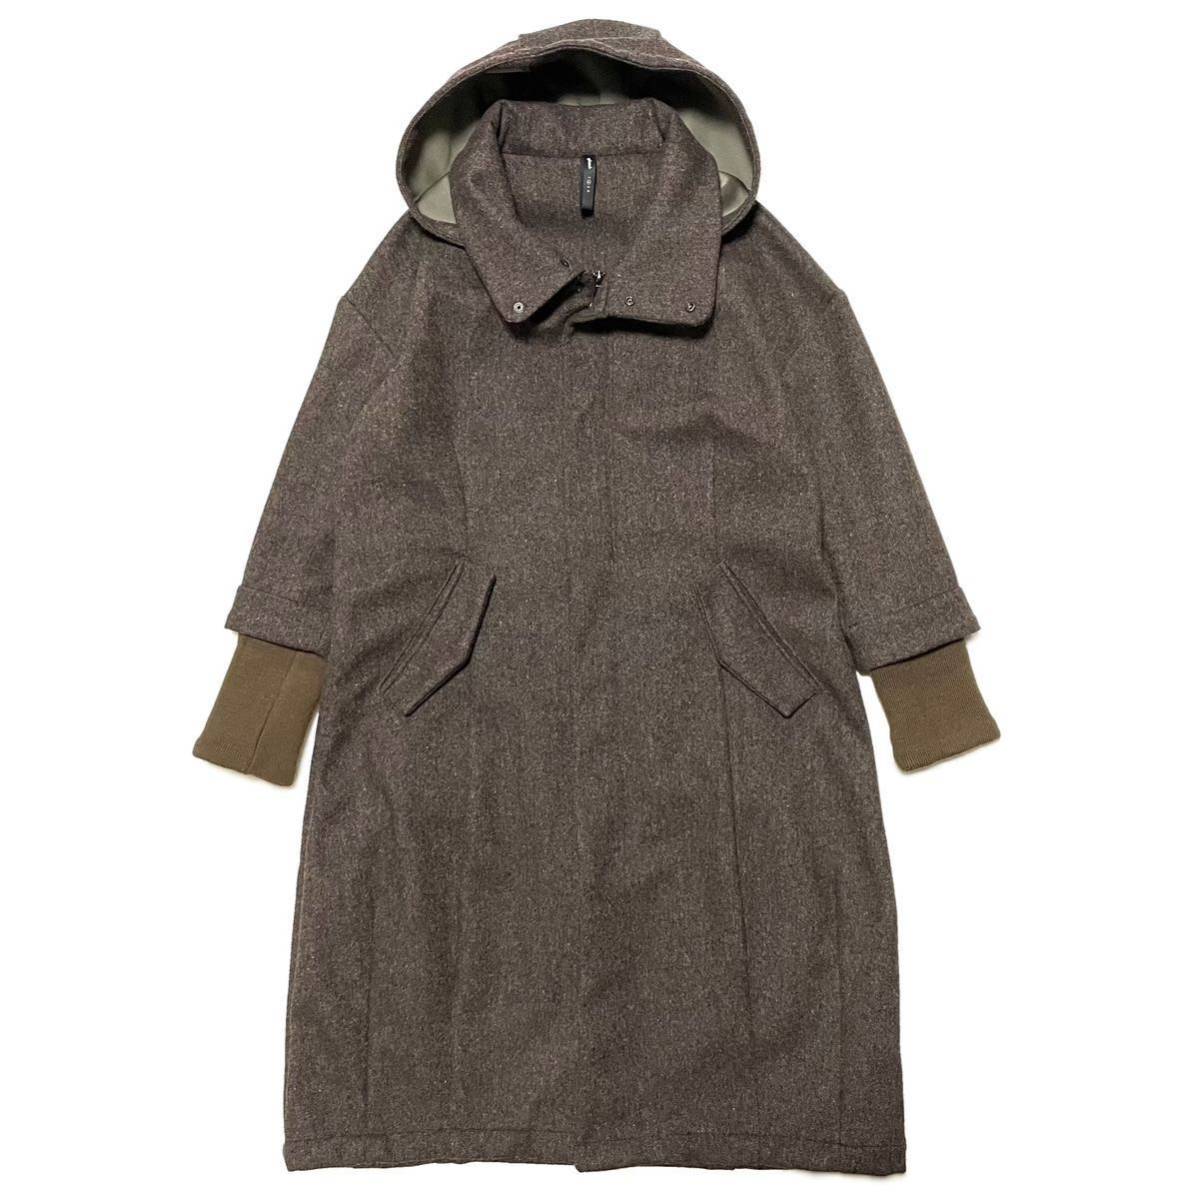 glamb gram Rook balloon coat with a hood . high‐necked rib wool Layered lock ba Rune long coat jacket blouson 2